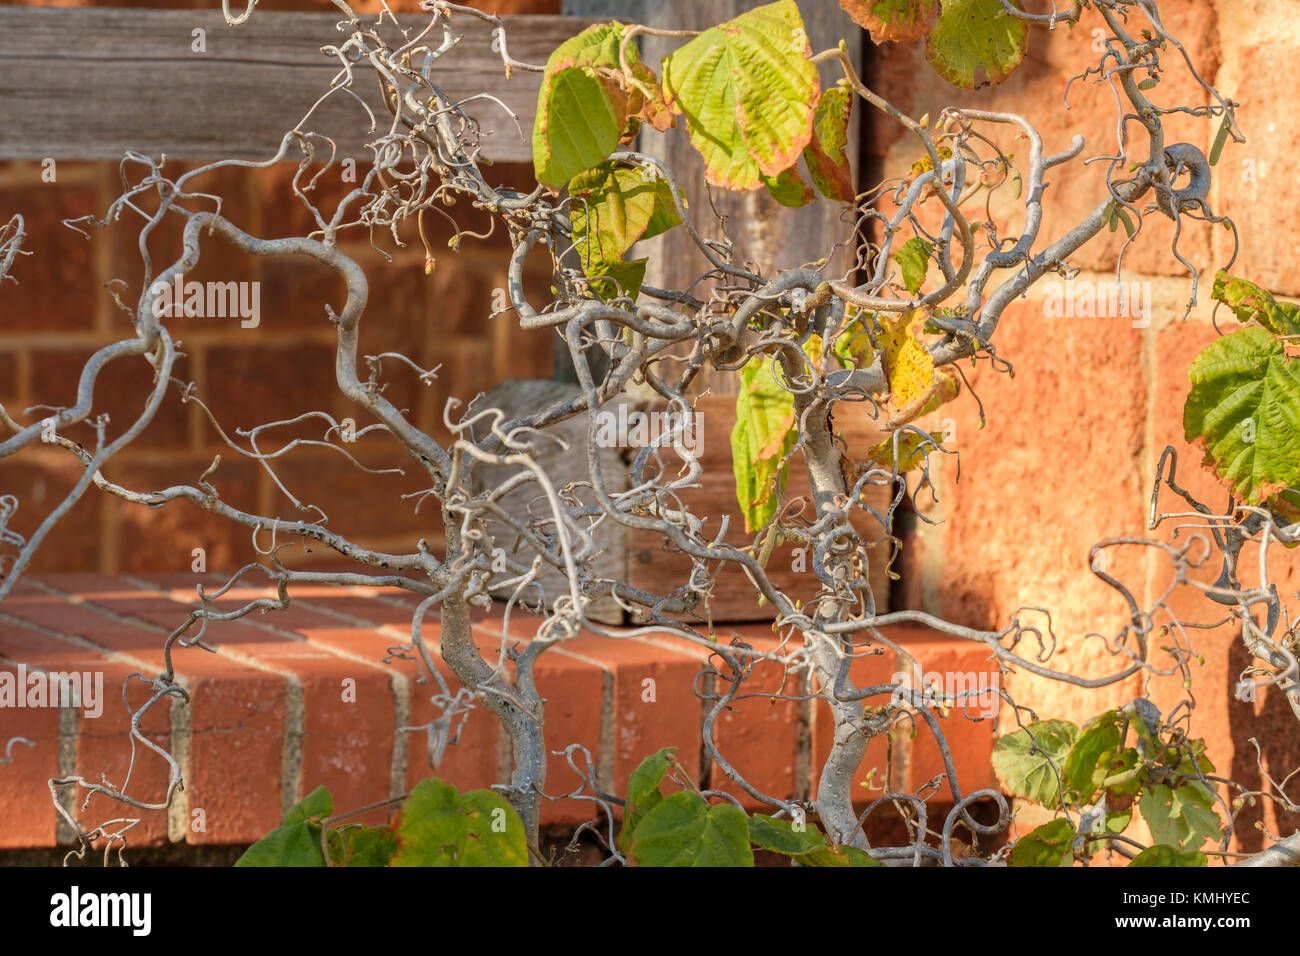 Un noisetier, Avellana contorta, bétulacées, montrant l'onagre corkscrew branches en automne. Oklahoma City, Oklahoma, USA. Banque D'Images